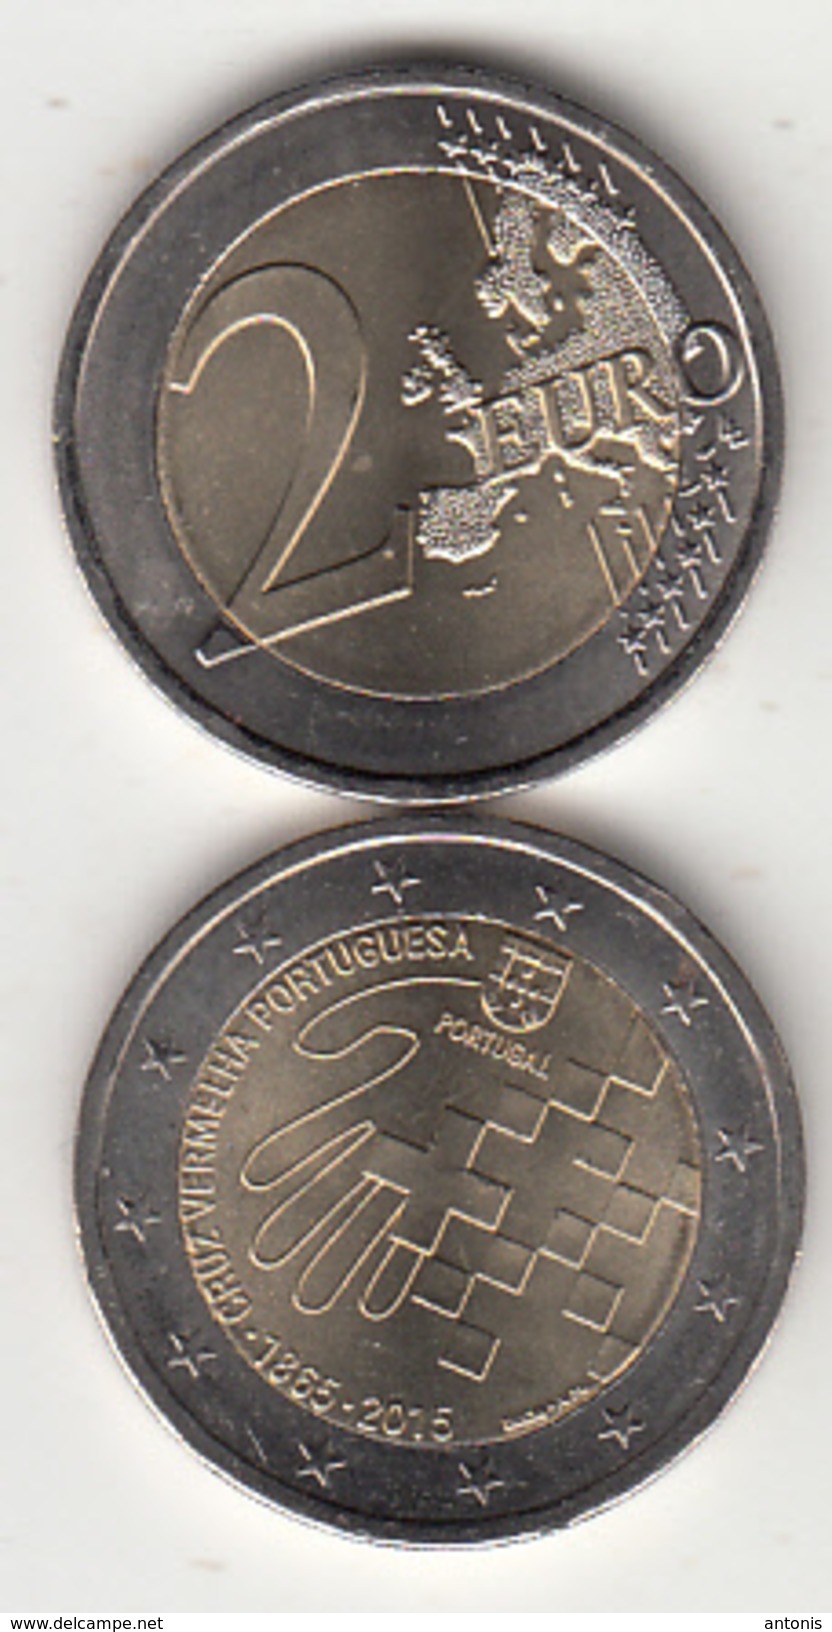 PORTUGAL - Cruz Vermelha Portuguesa 1865-2015, 2 Euro Coin 2015, Unused - Portugal